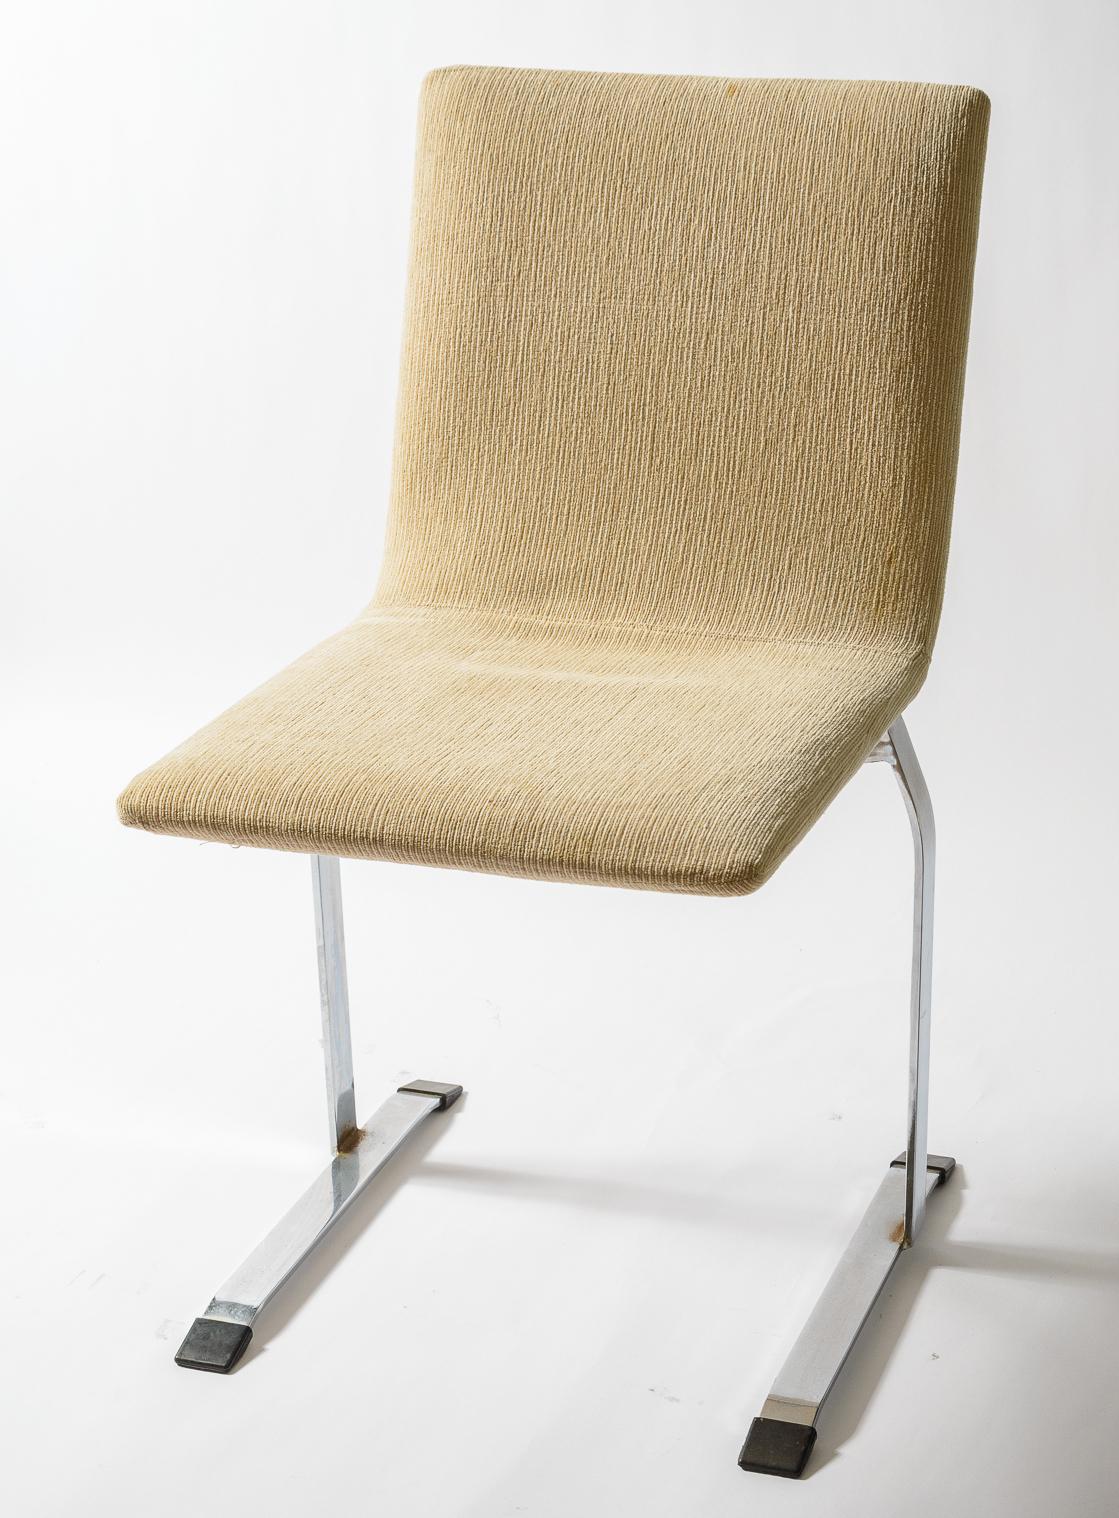 A set of 4 Saporiti Sled Chairs
Original Upholstery
